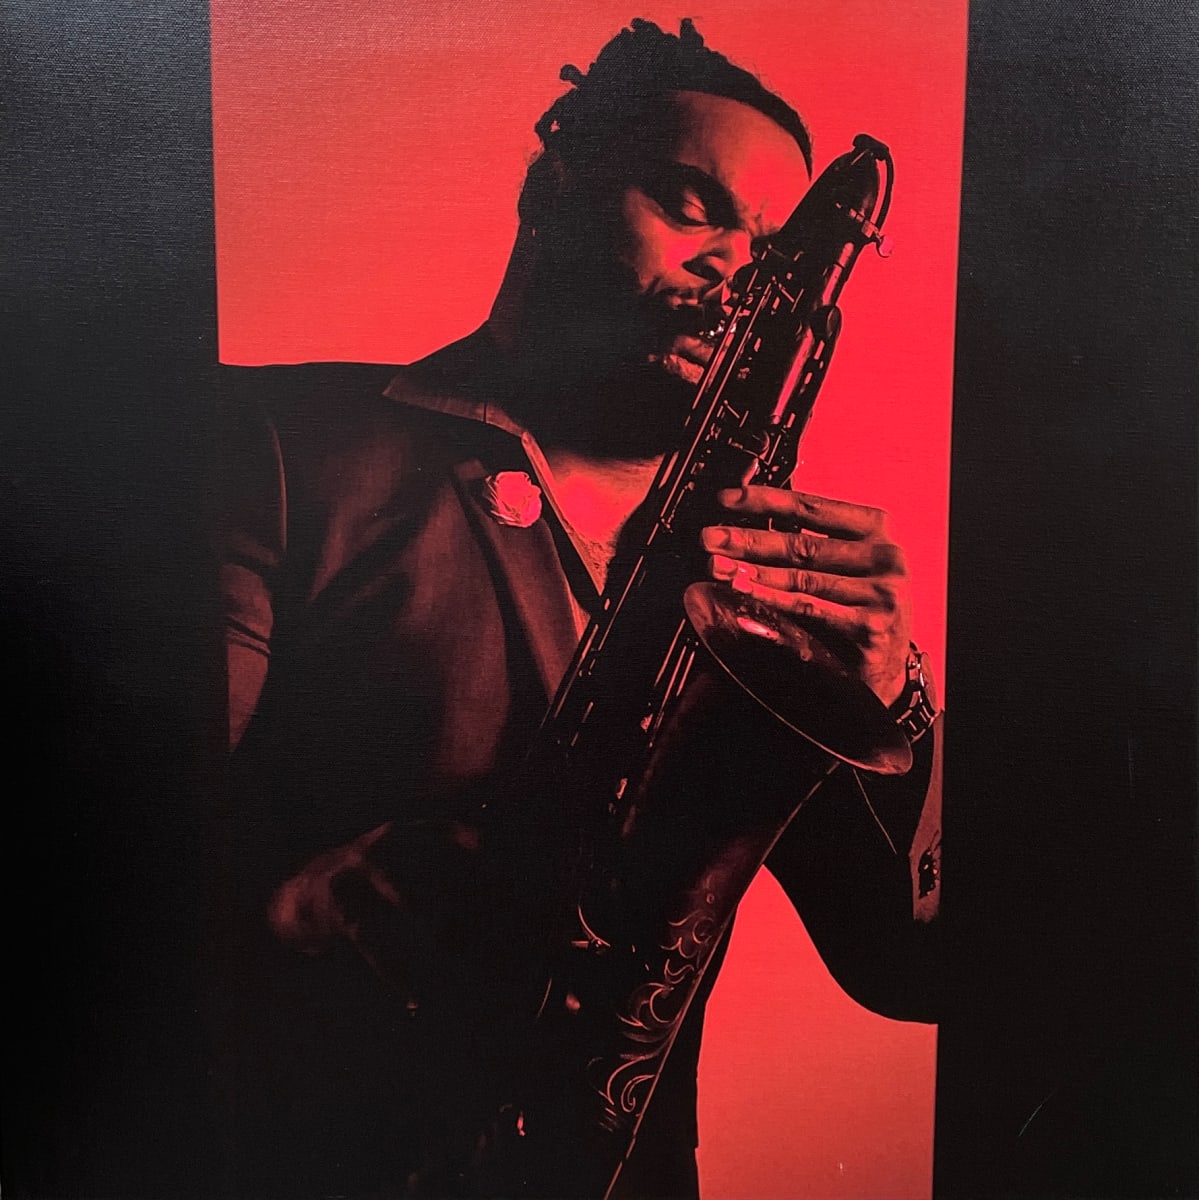 Alex Banks, Saxophonist by Dokk Savage  Image: https://www.dokksavagephotography.com